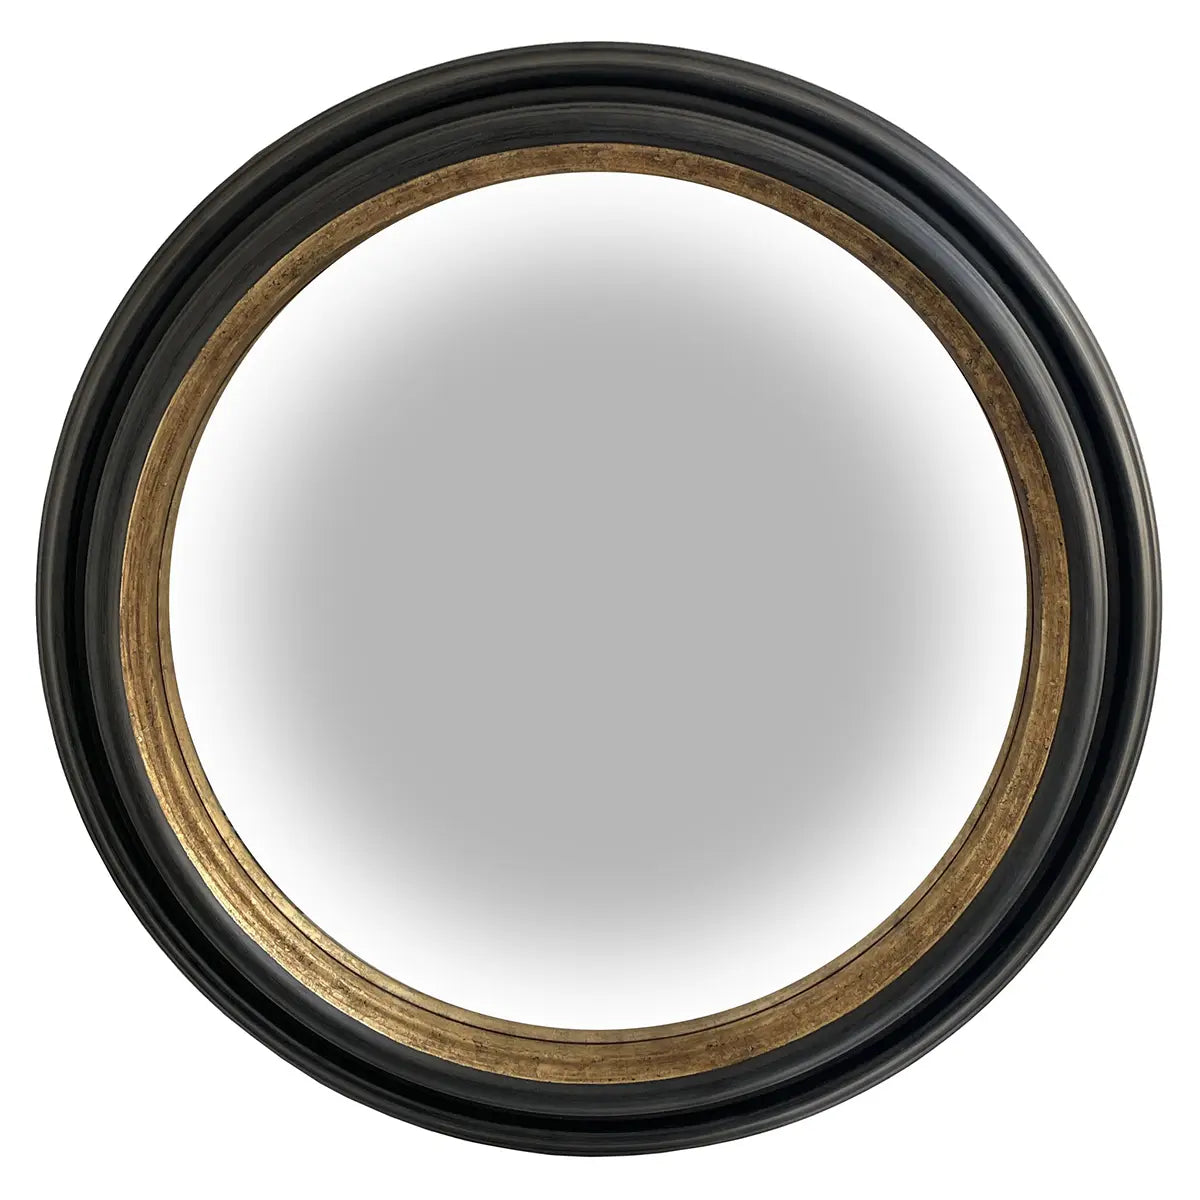 ShiShi Convex Mirror Rusty Black And Gold